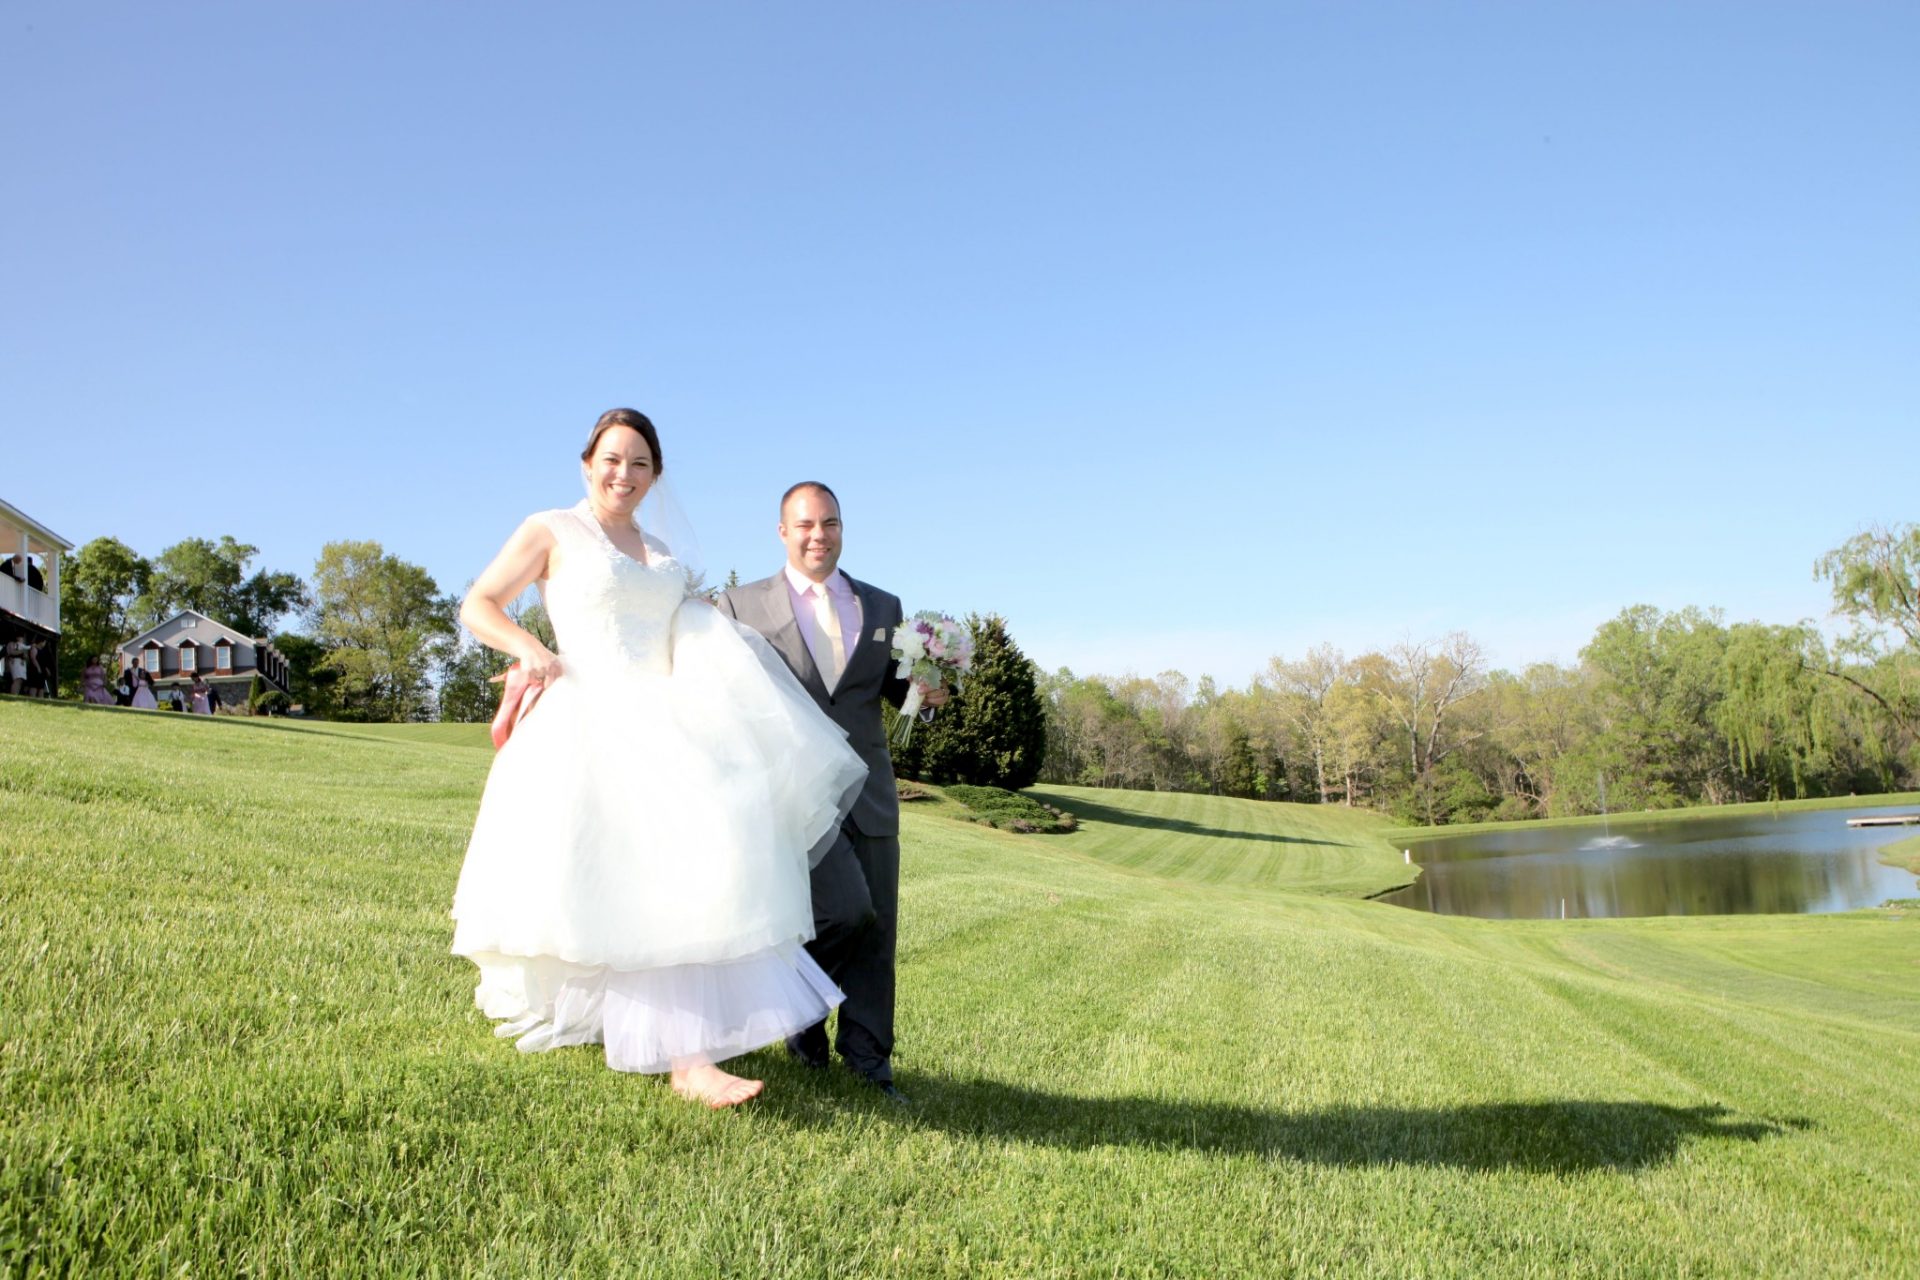 field bride and groom